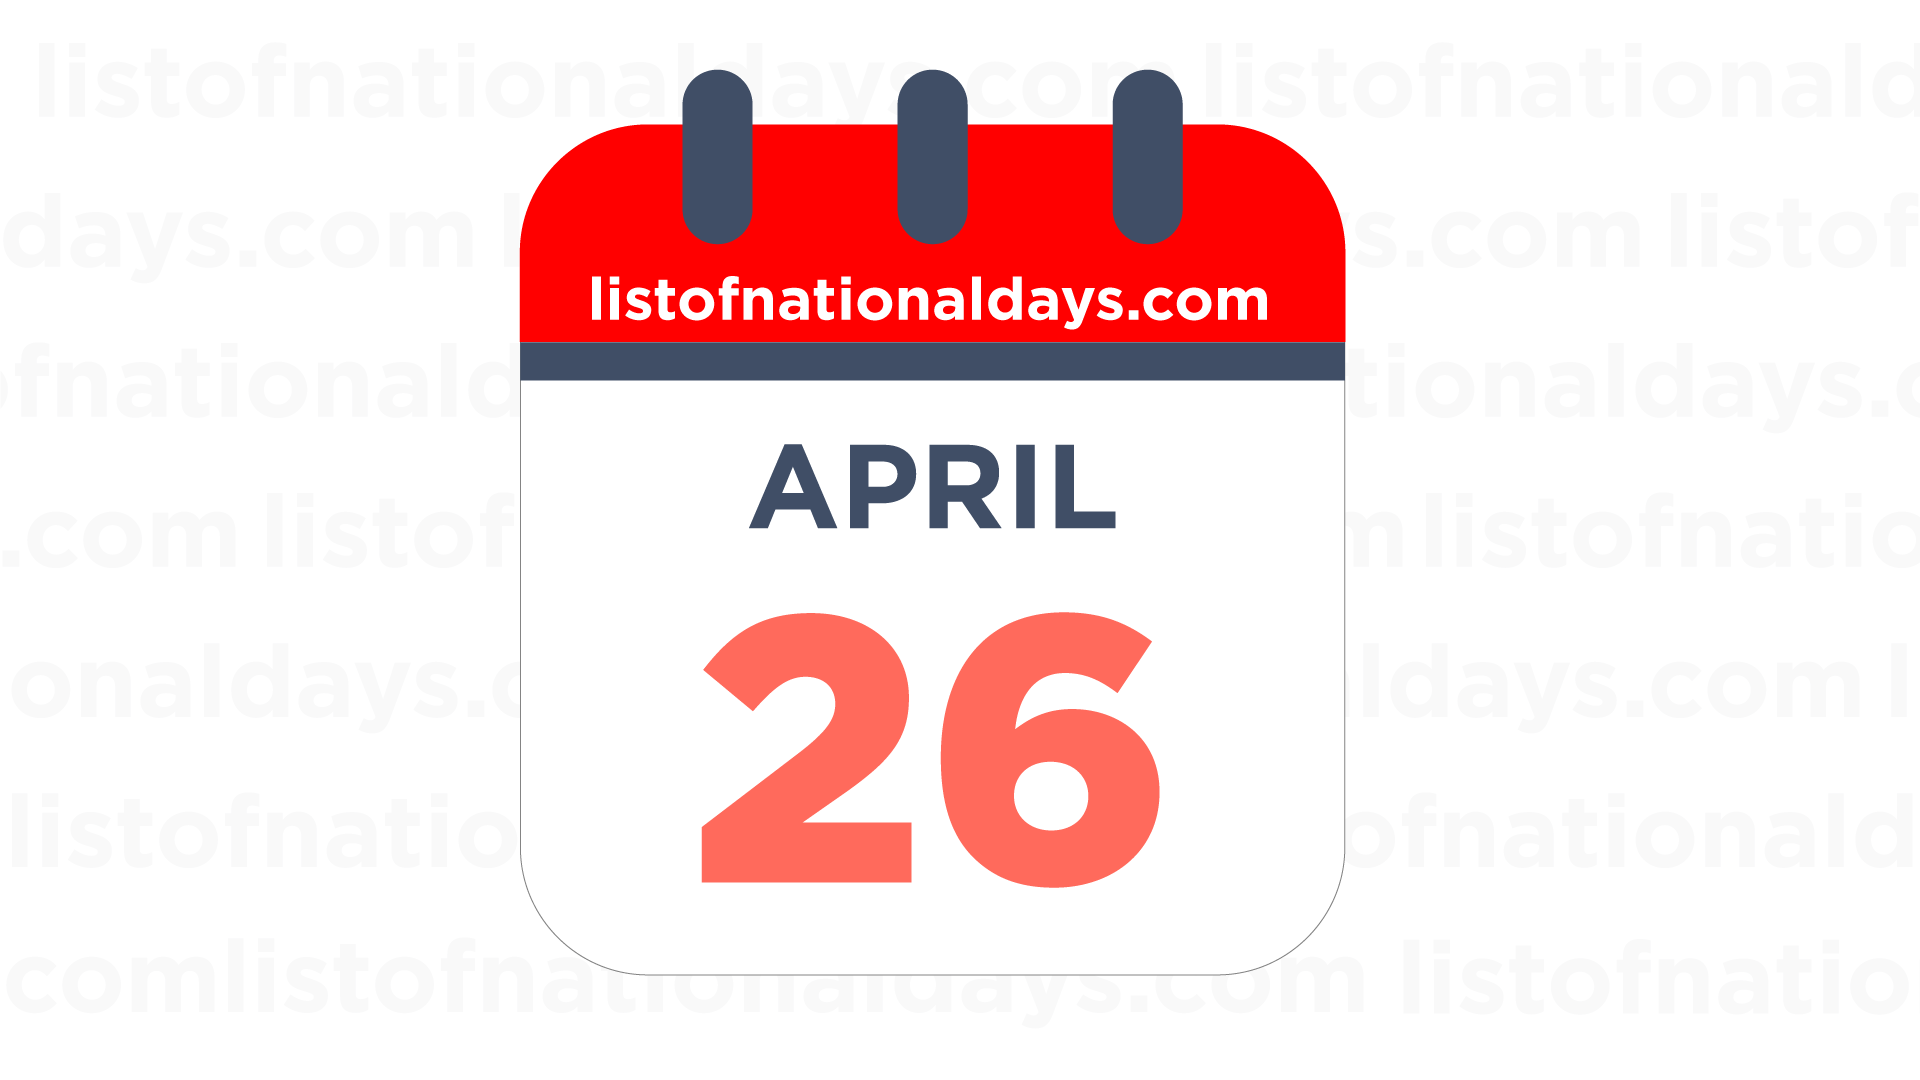 APRIL 26TH: National Holidays, Observances & Famous Birthdays